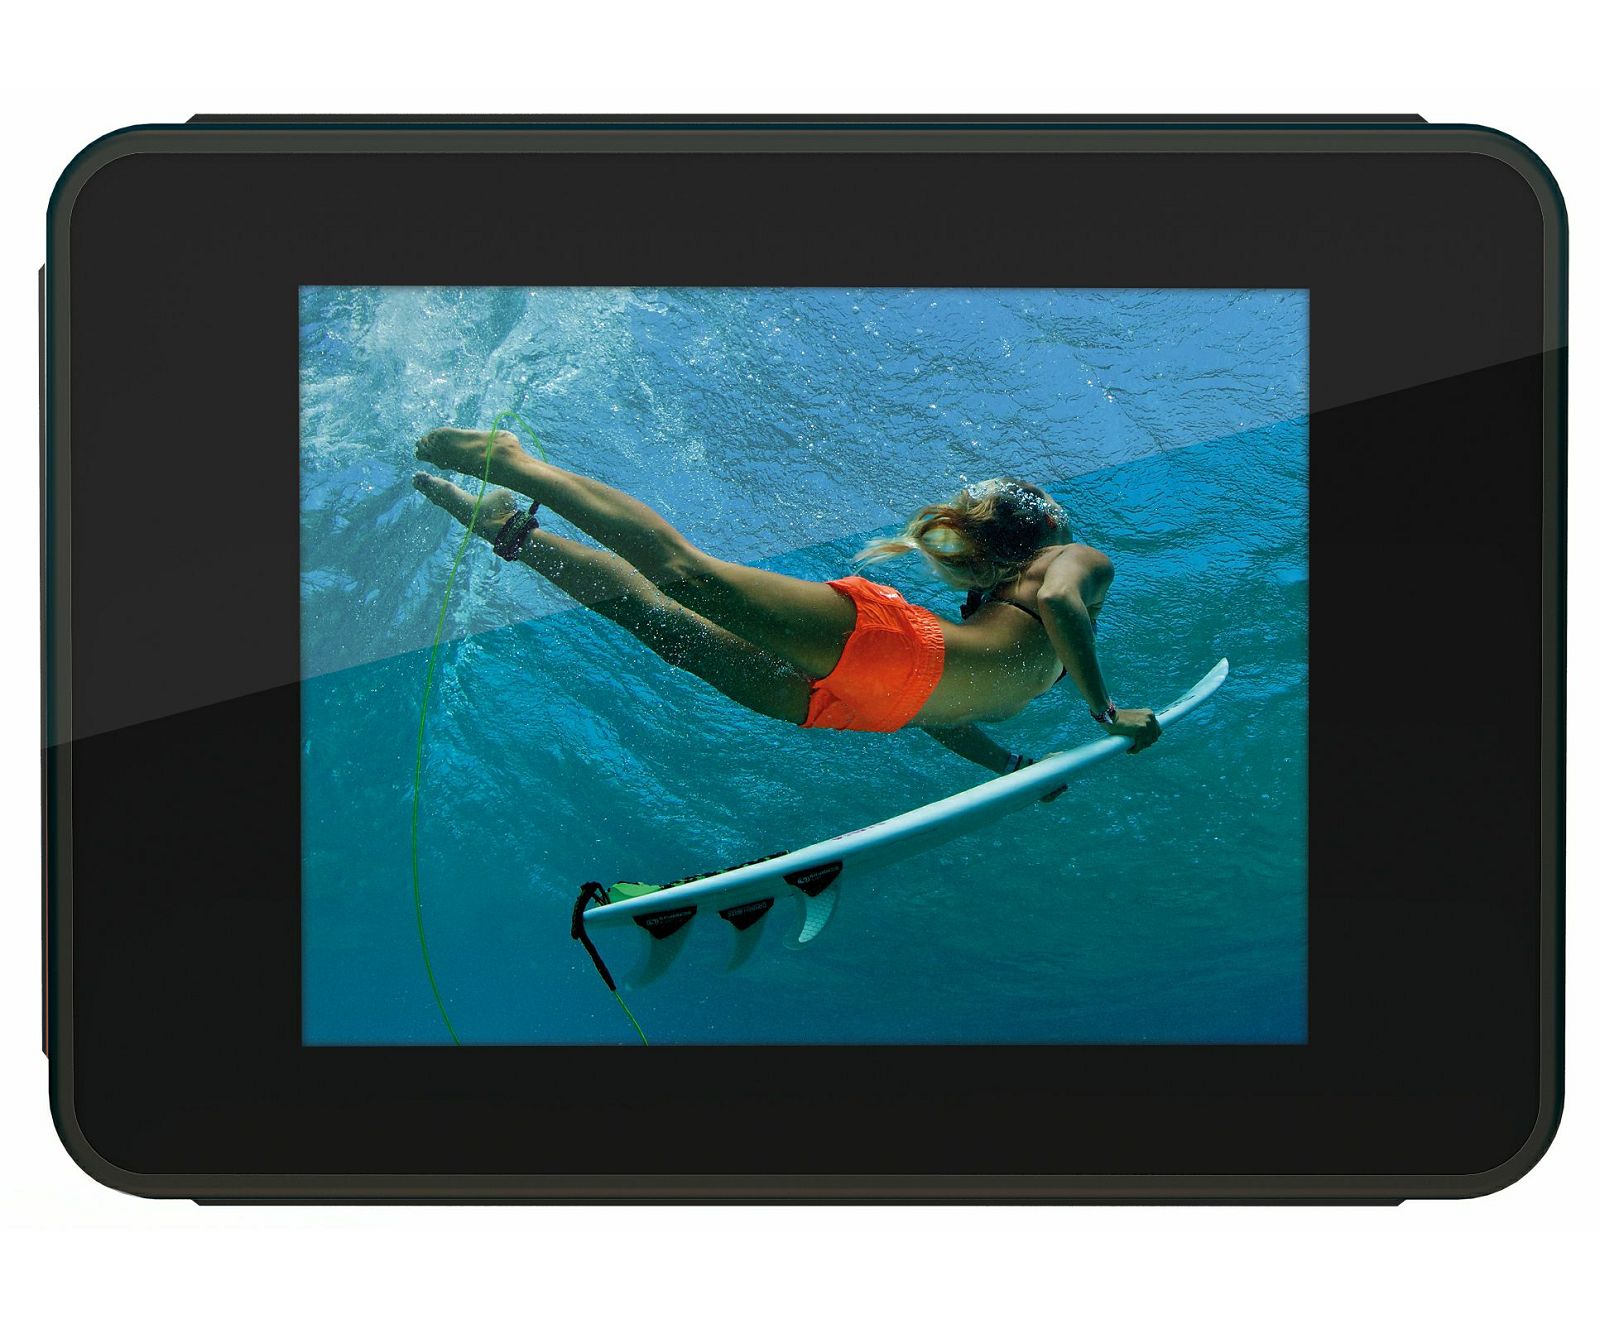 GoXtreme Barracuda Ultra HD Action Camera 16MP WiFi Waterproof sportska akcijska kamera vodootporna do 10m (20144)